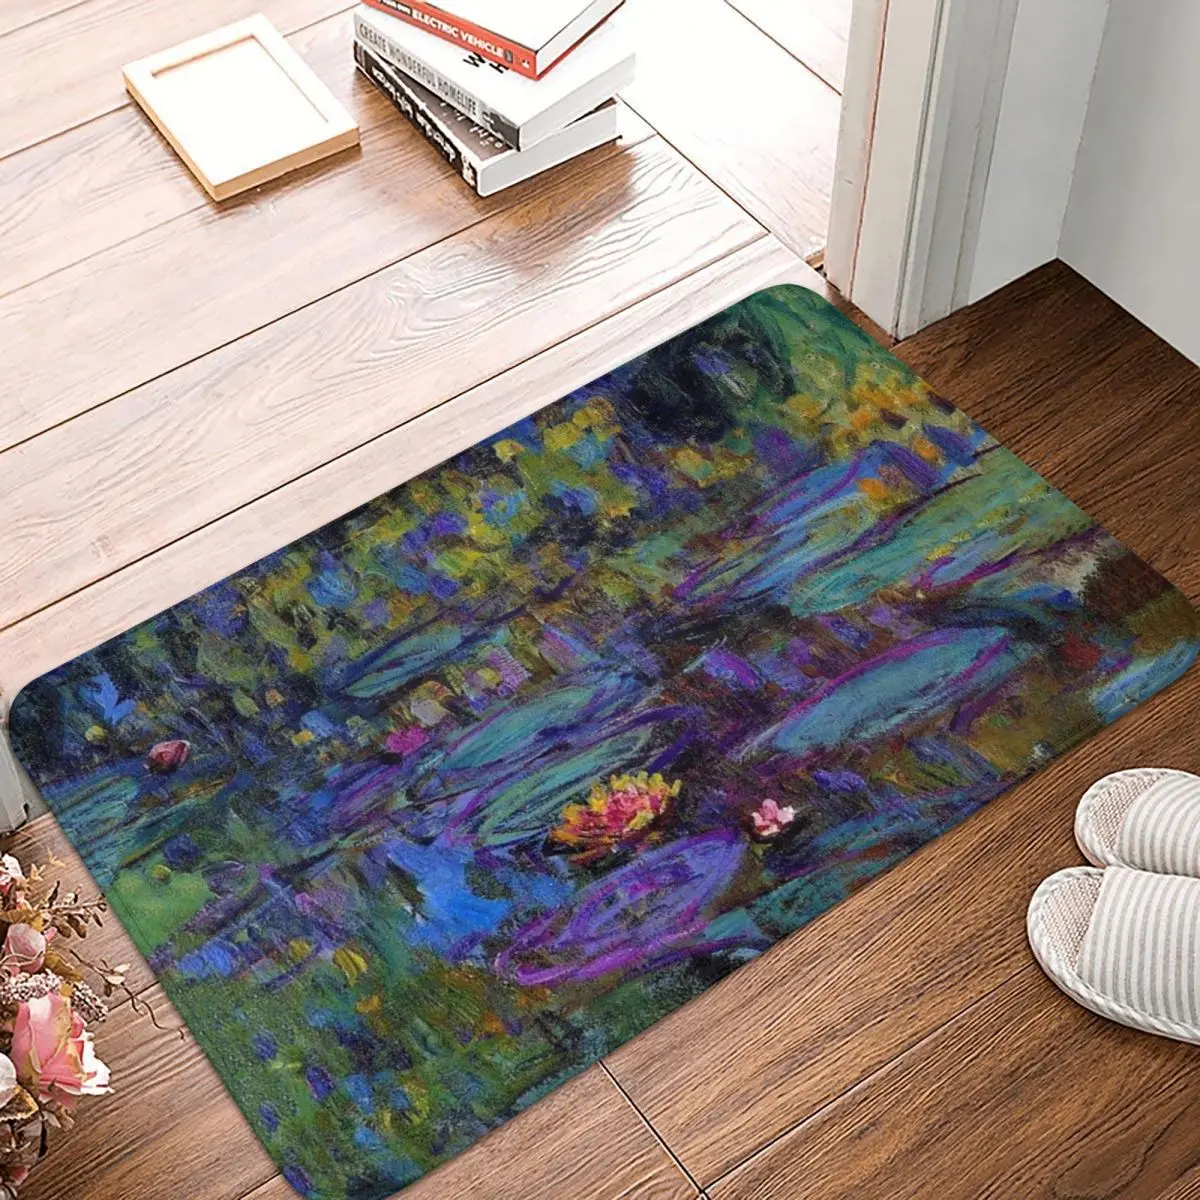 

Monet Water Lilies Doormat Carpet Mat Rug Polyester PVC Non-Slip Floor Decor Bath Bathroom Kitchen Living Room 40x60